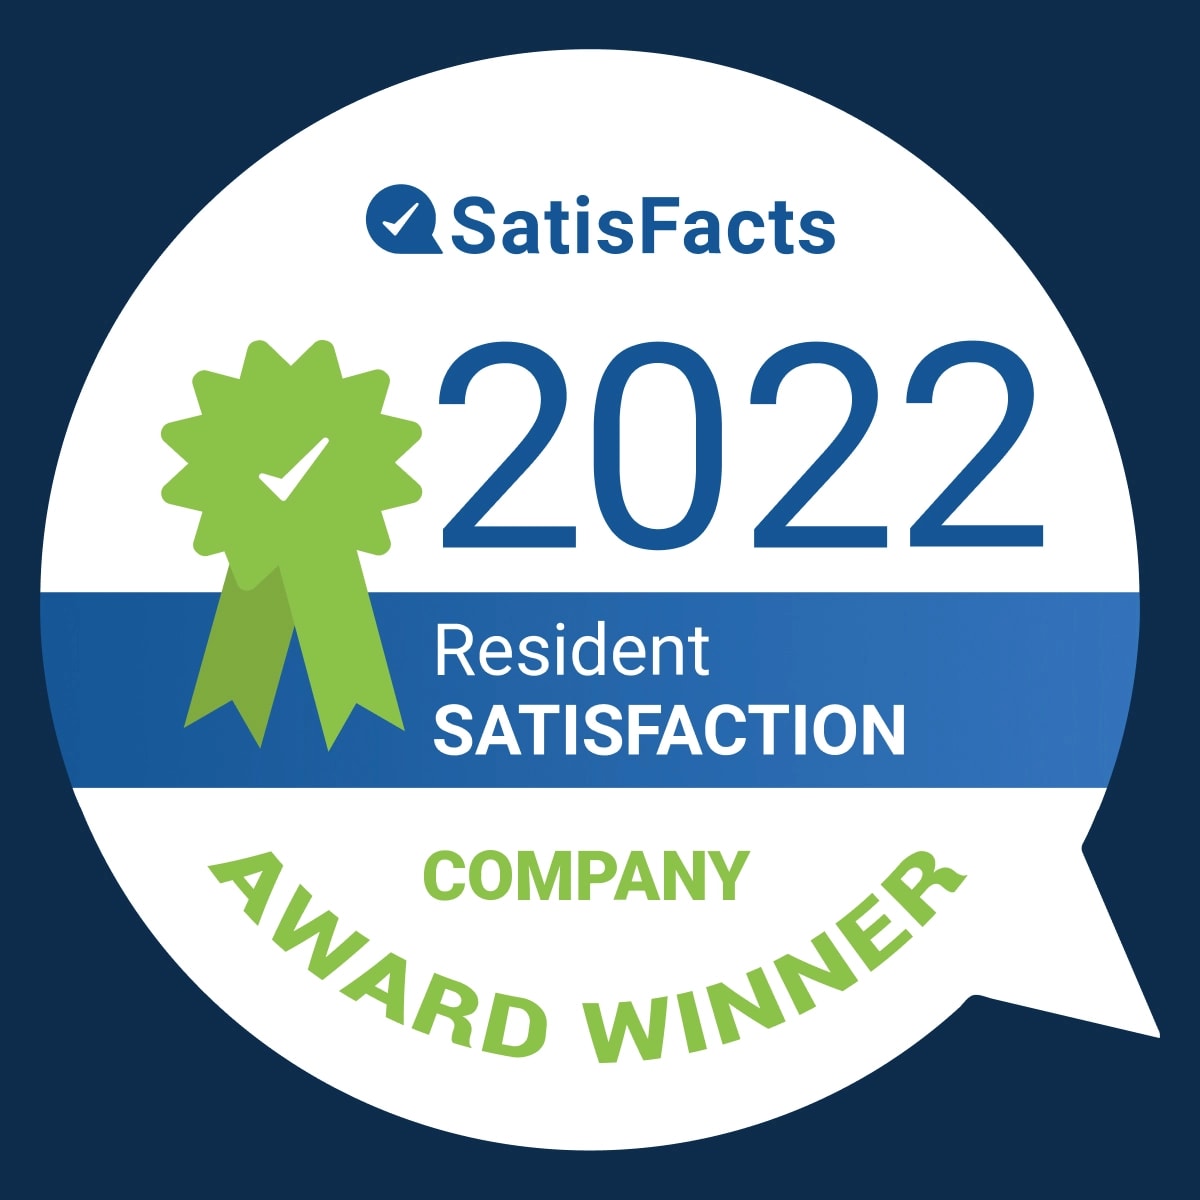 SatisFacts Resident Satisfaction Company Award Winner forPillar Properties in Seattle, Washington